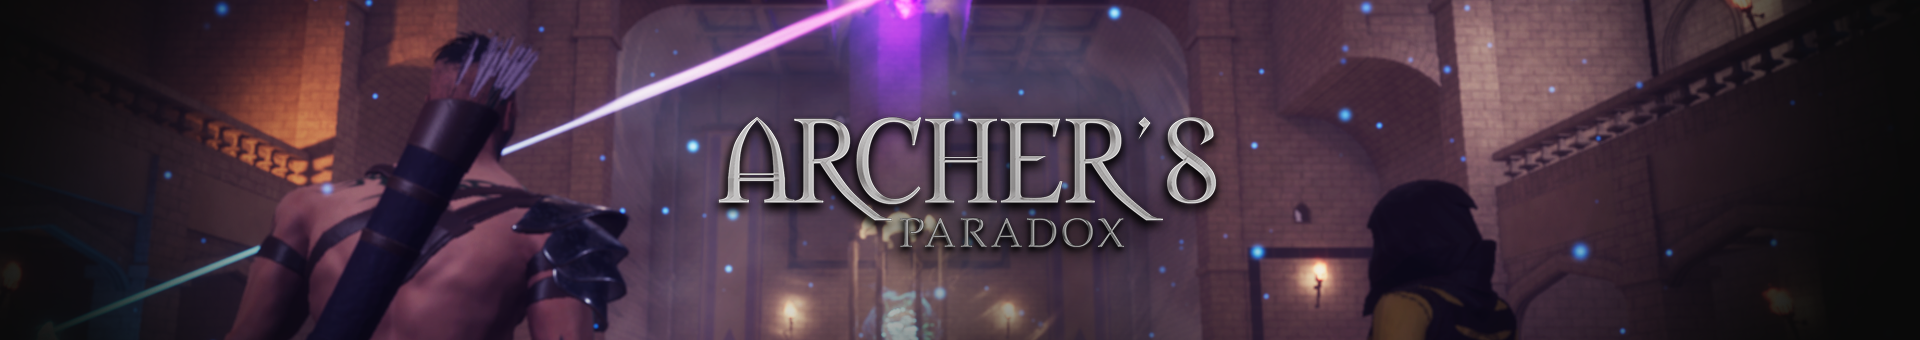 Archers Paradox